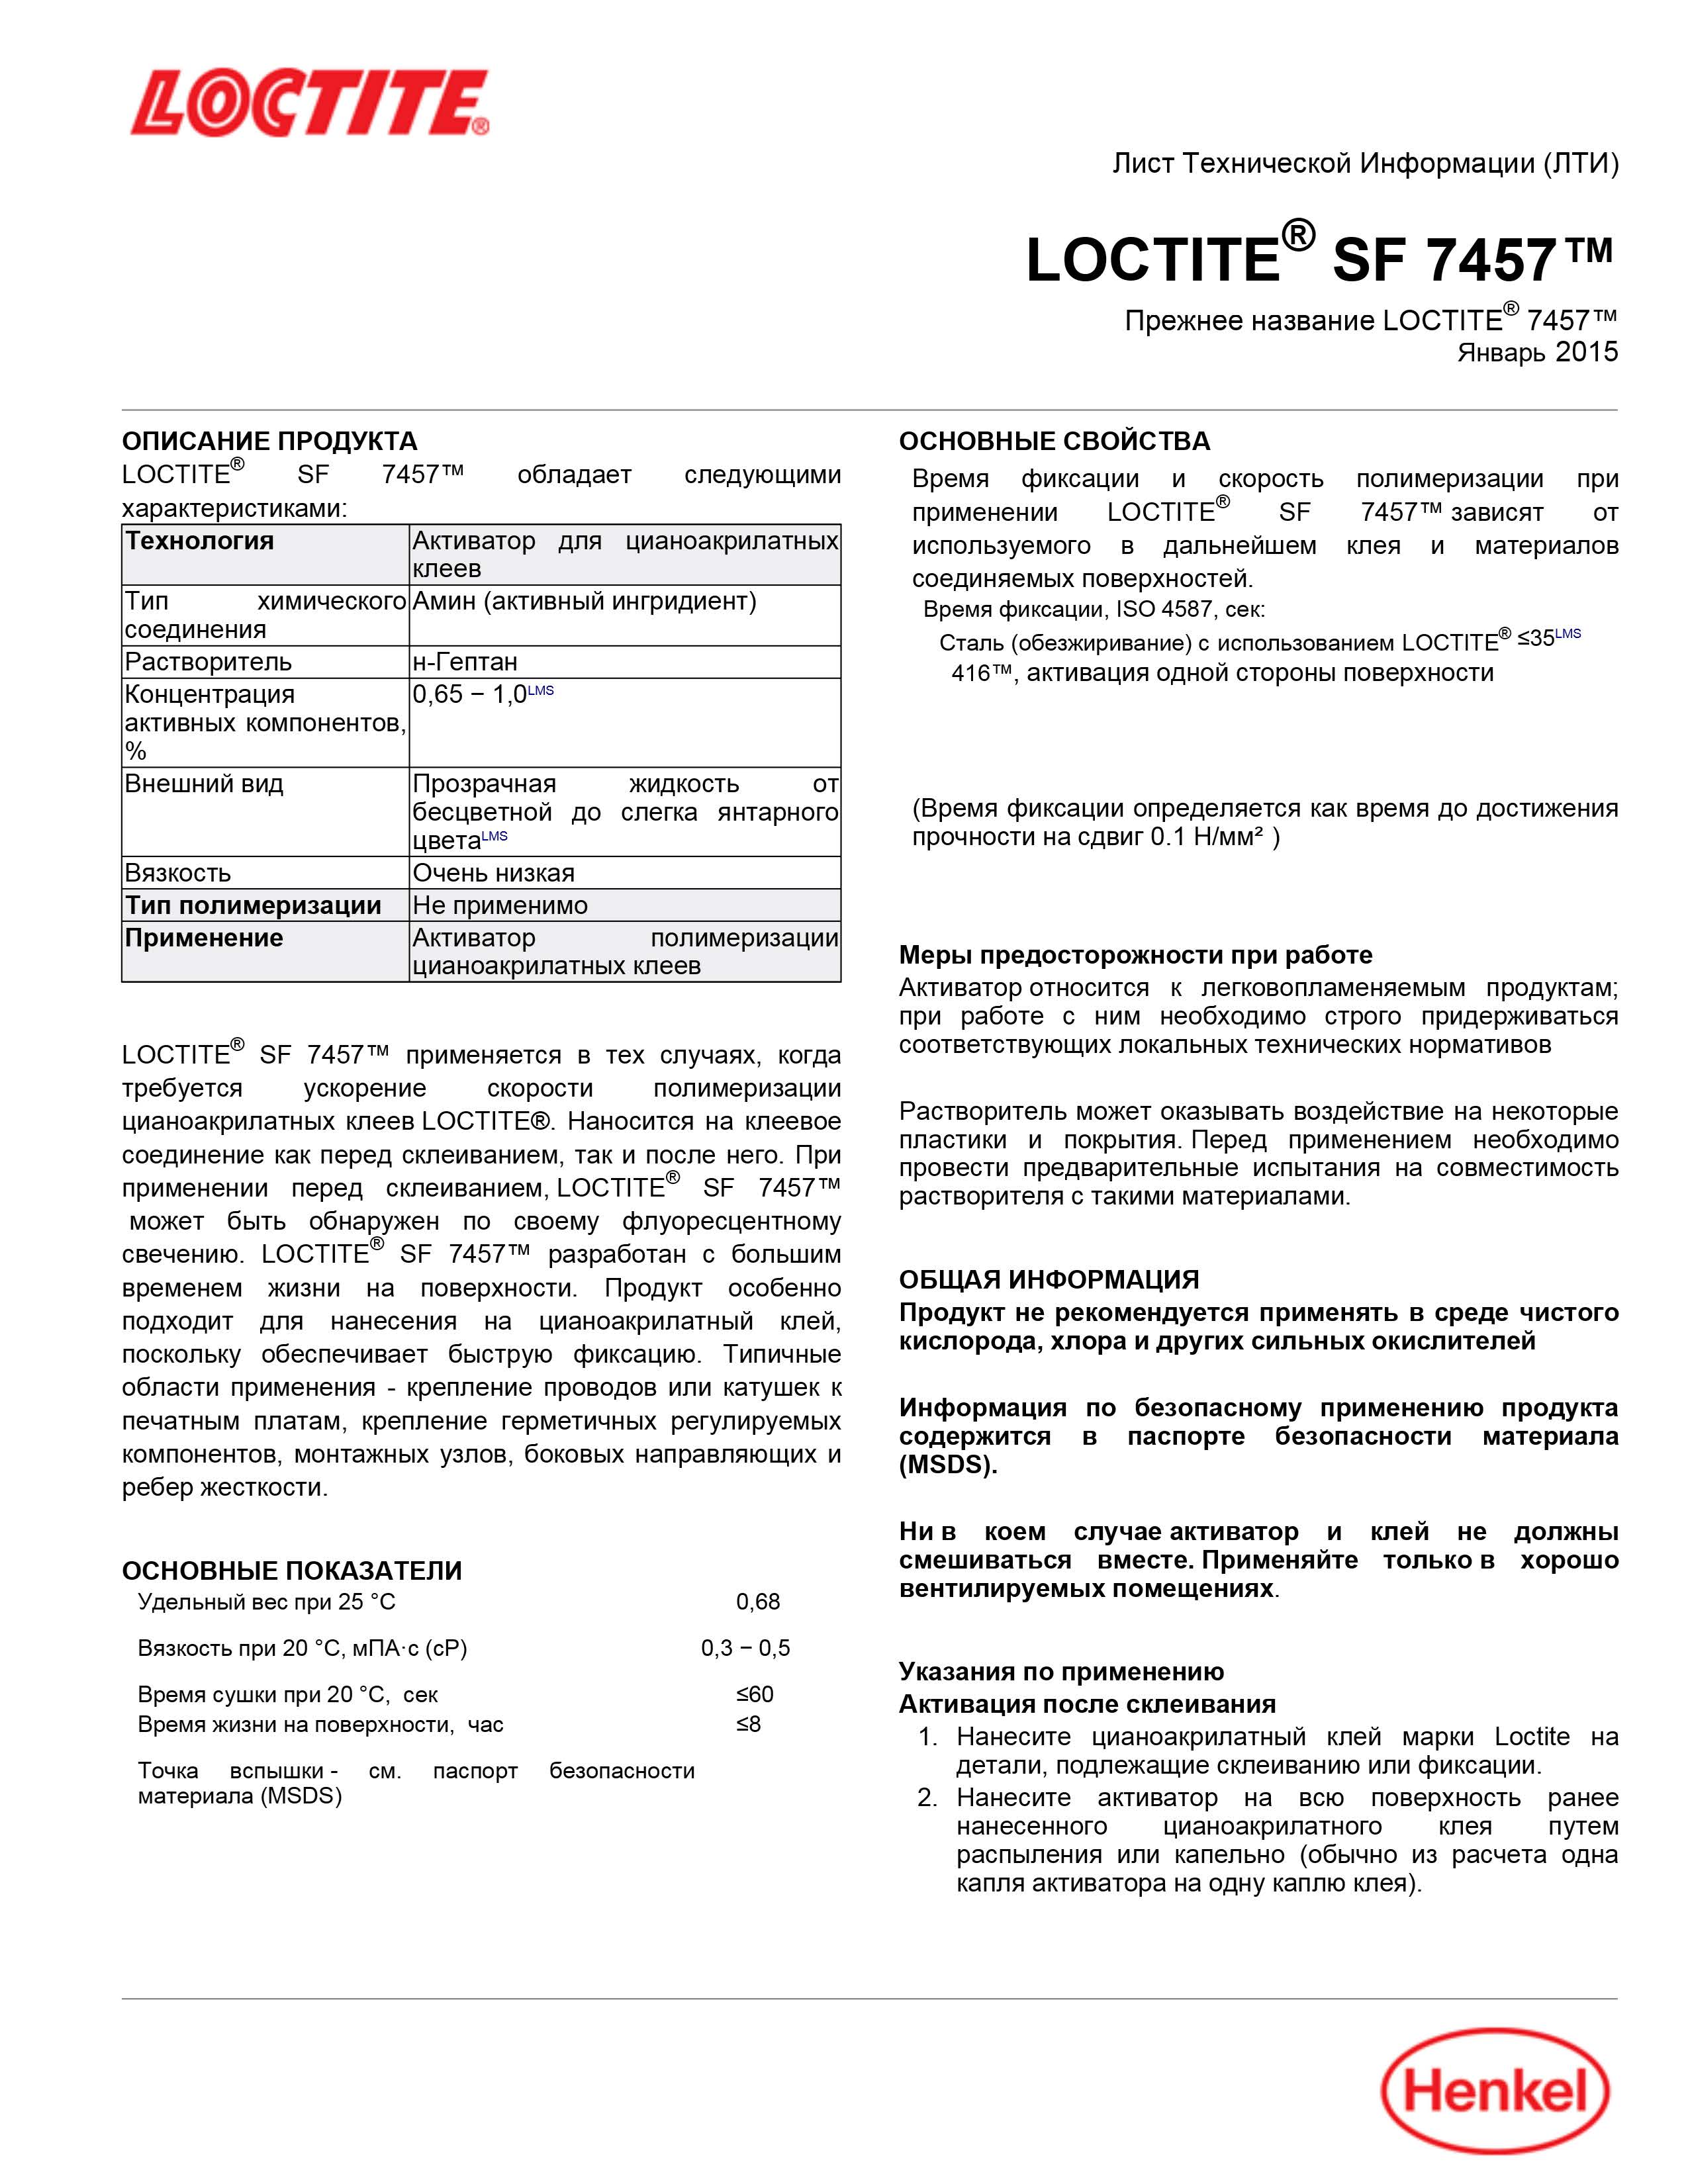 Активатор для цианоакрилатов (спрей) Локтайт  Loctite SF 7457, 150мл